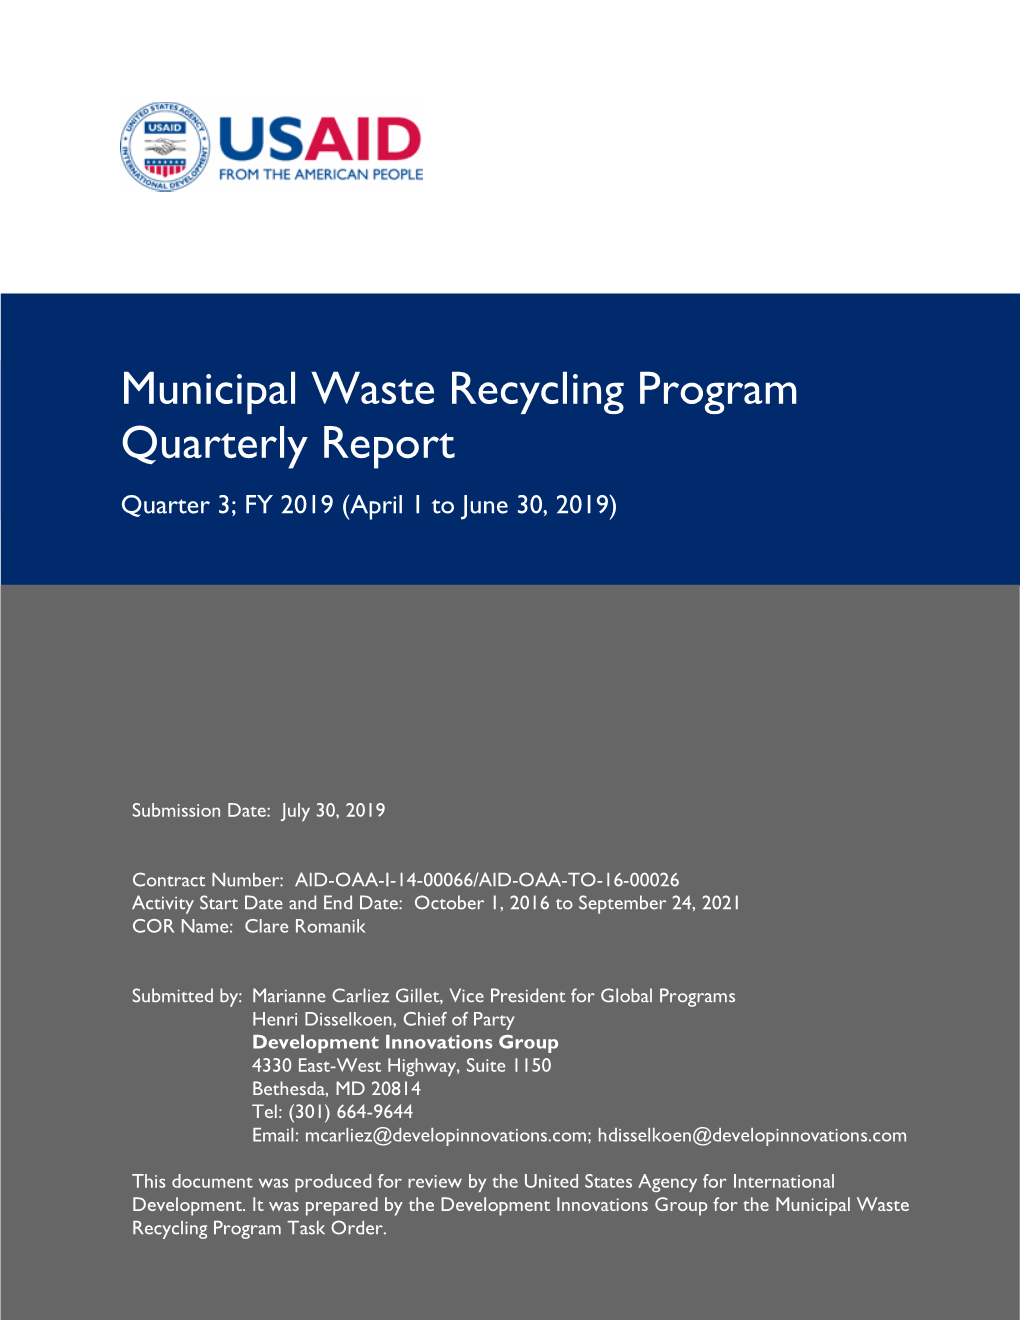 Municipal Waste Recycling Program Quarterly Report Quarter 3; FY 2019 (April 1 to June 30, 2019)